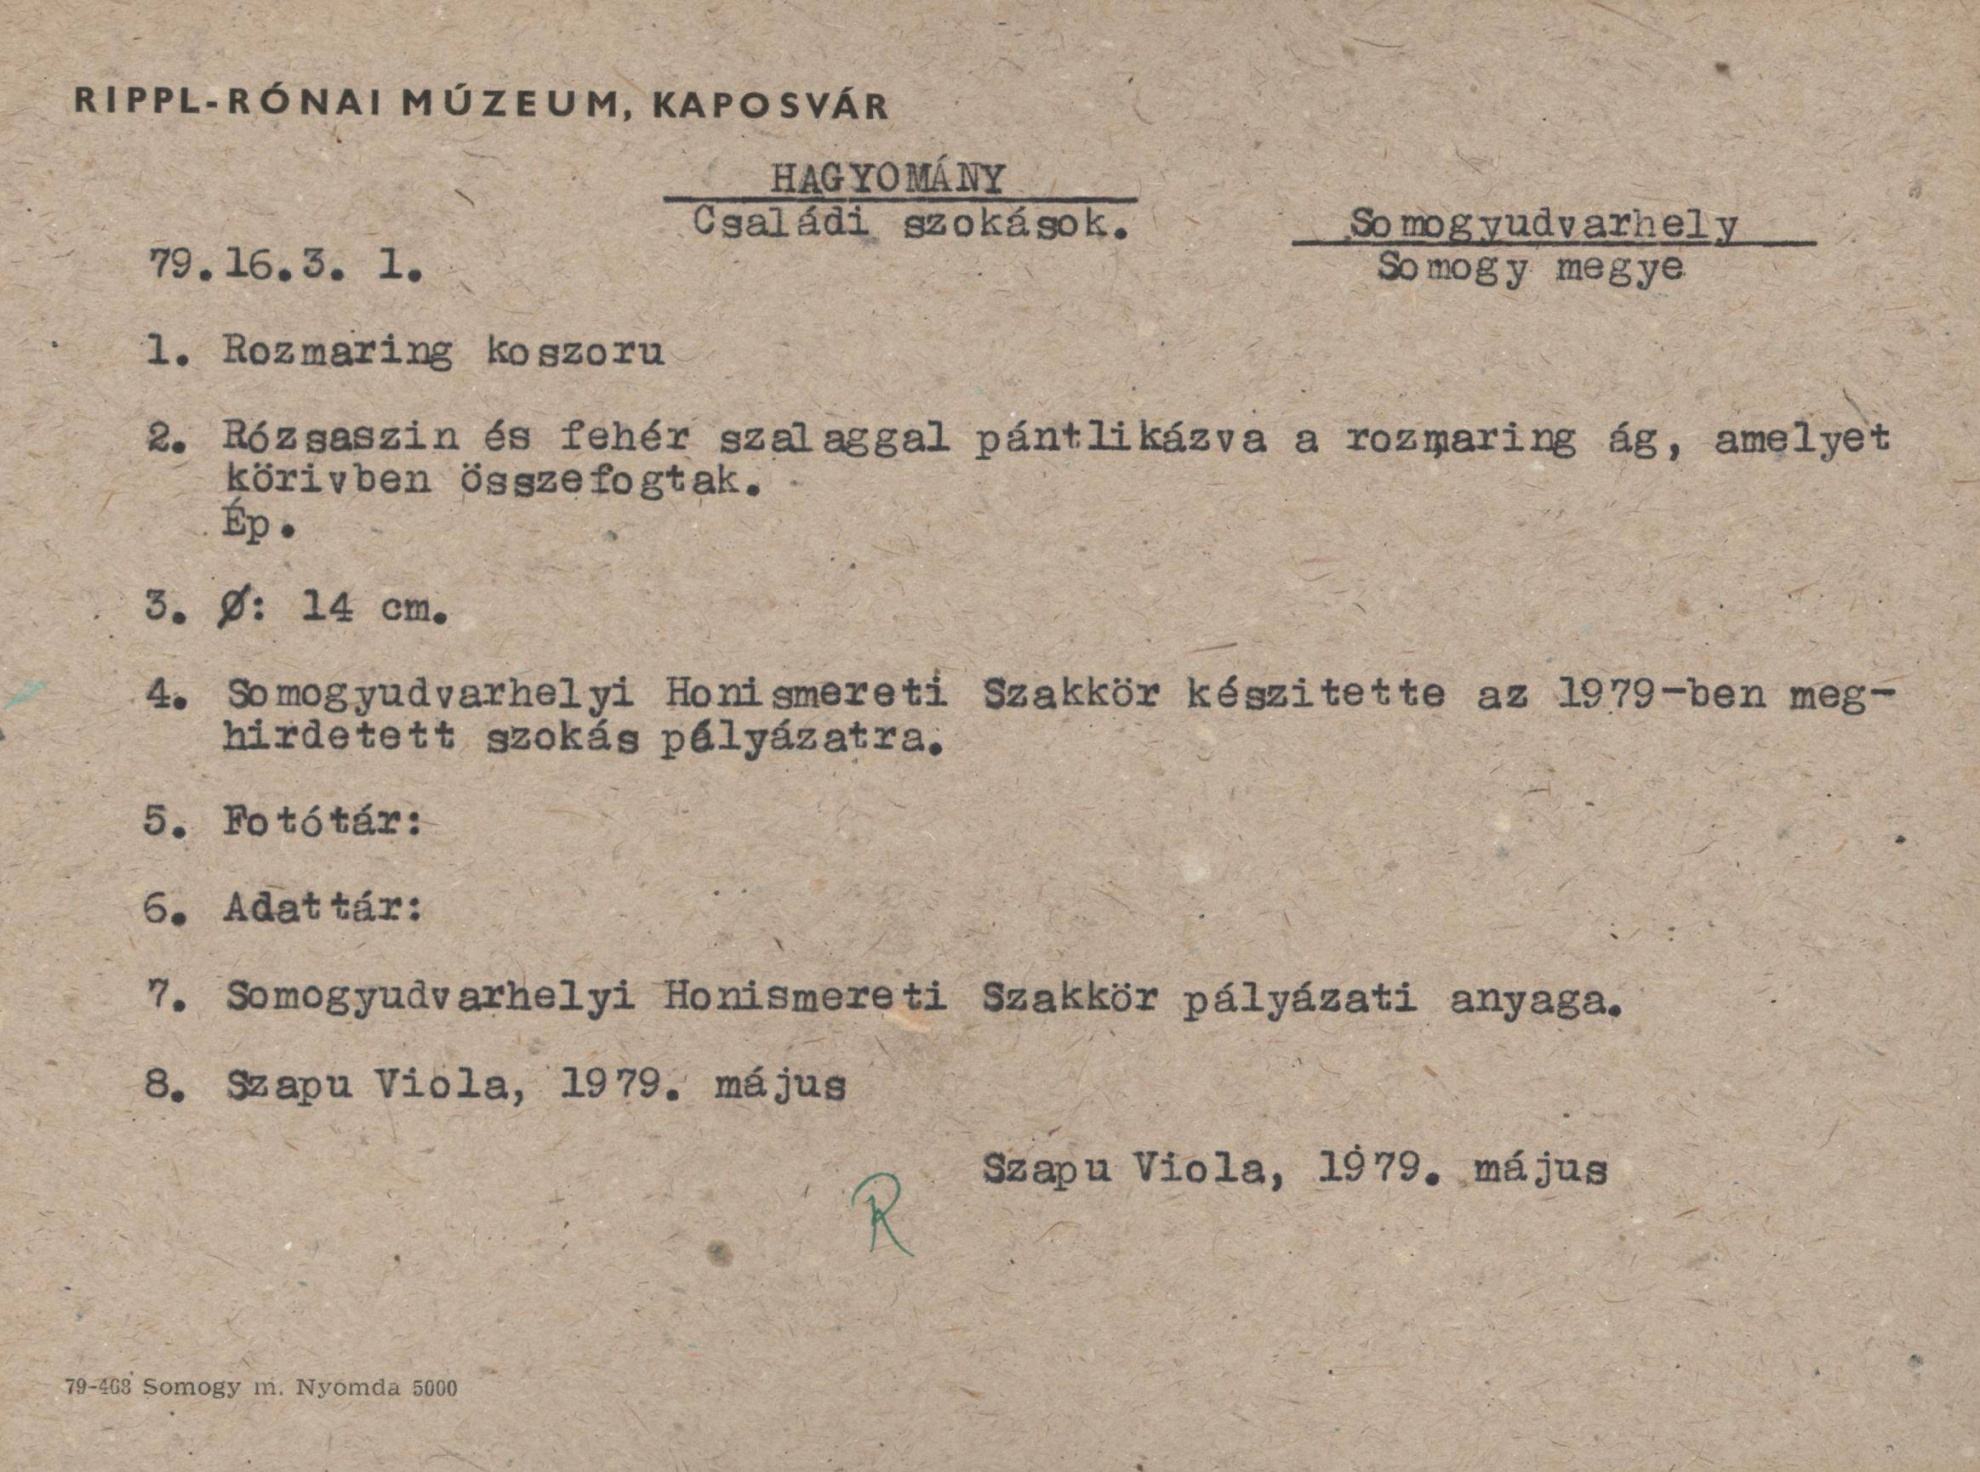 Rozmaring koszorú (Rippl-Rónai Múzeum CC BY-NC-SA)